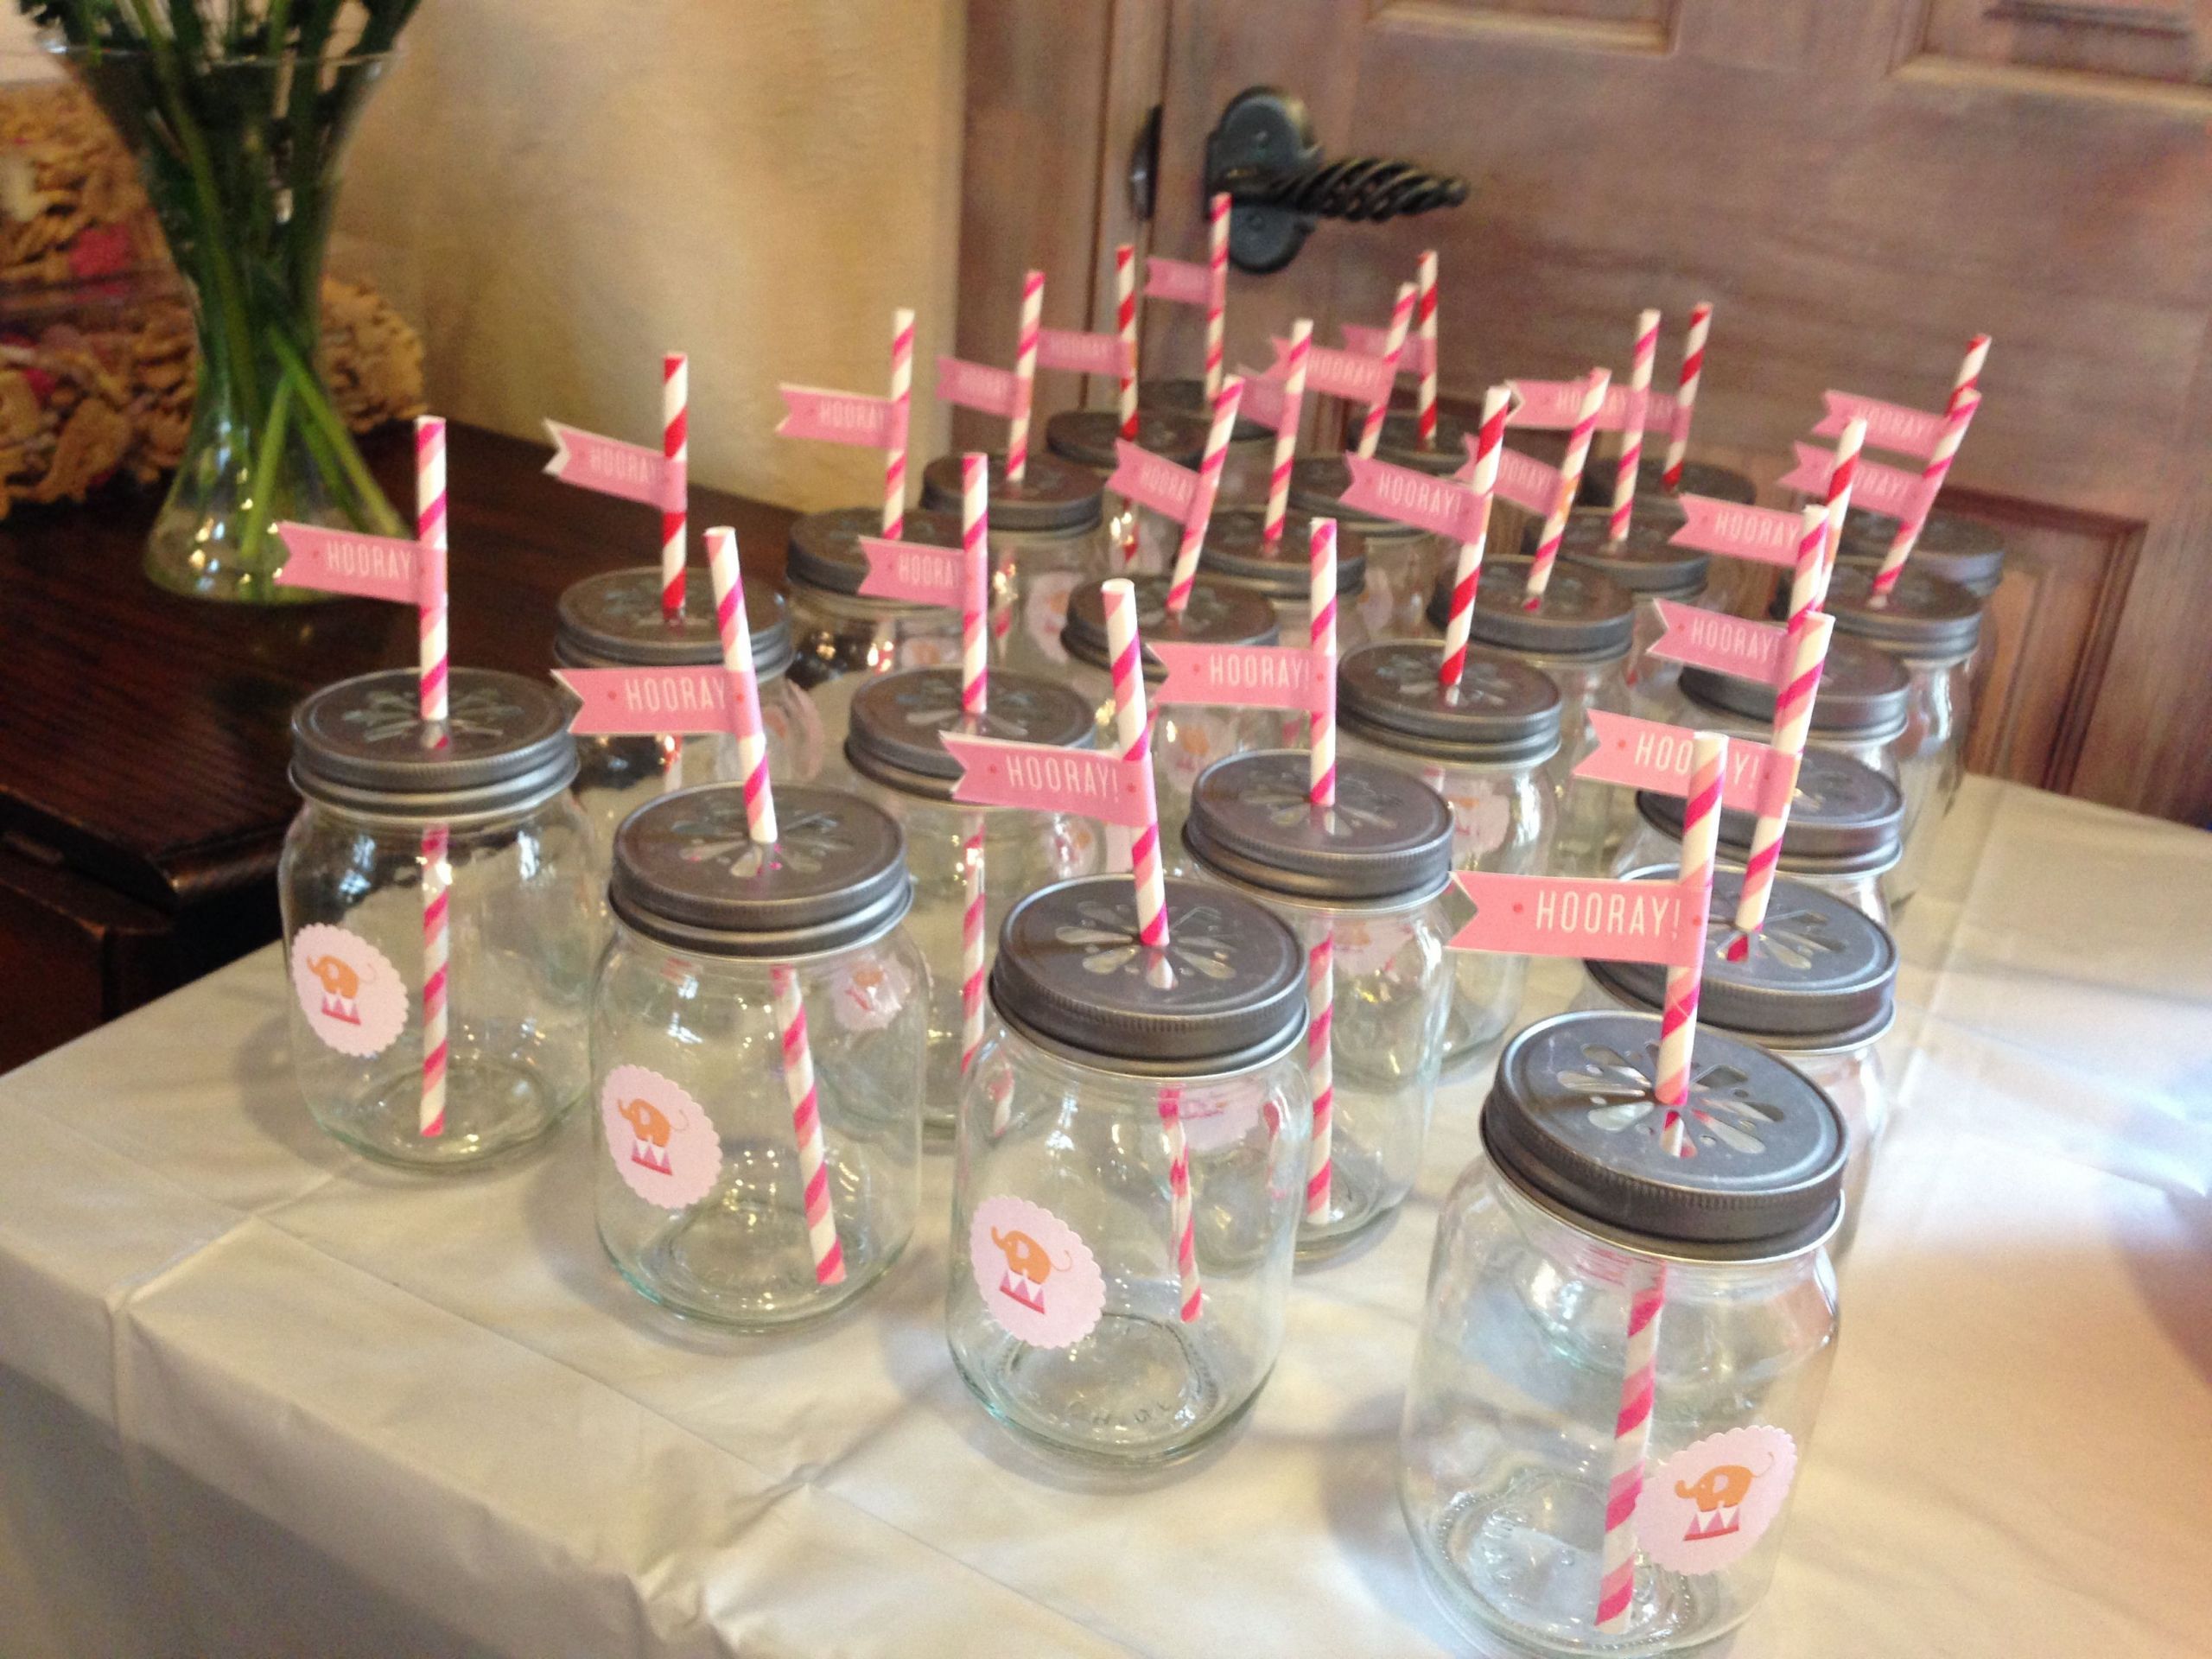 Mason Jar Gift Ideas For Baby Shower
 Mason jar glasses for elephant baby shower